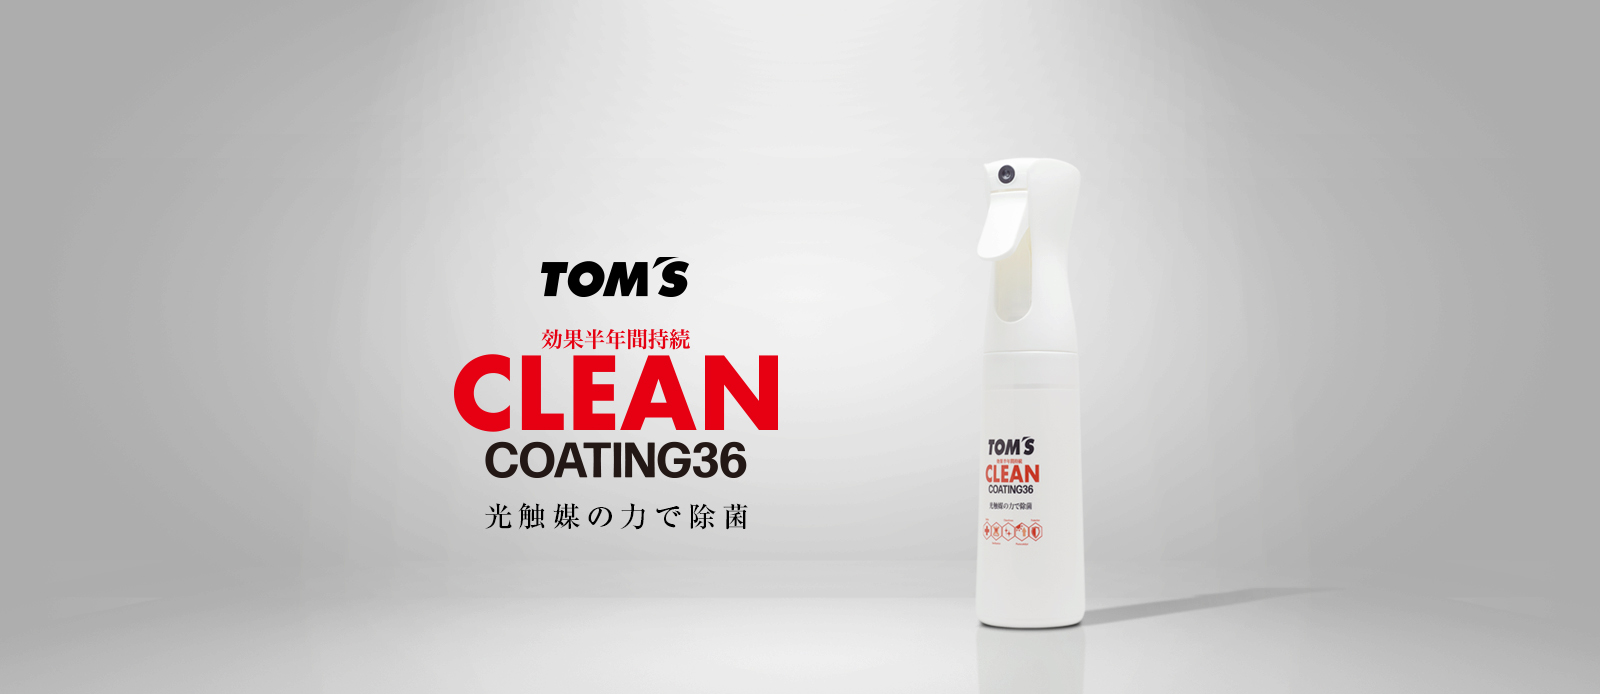 clean coating 36